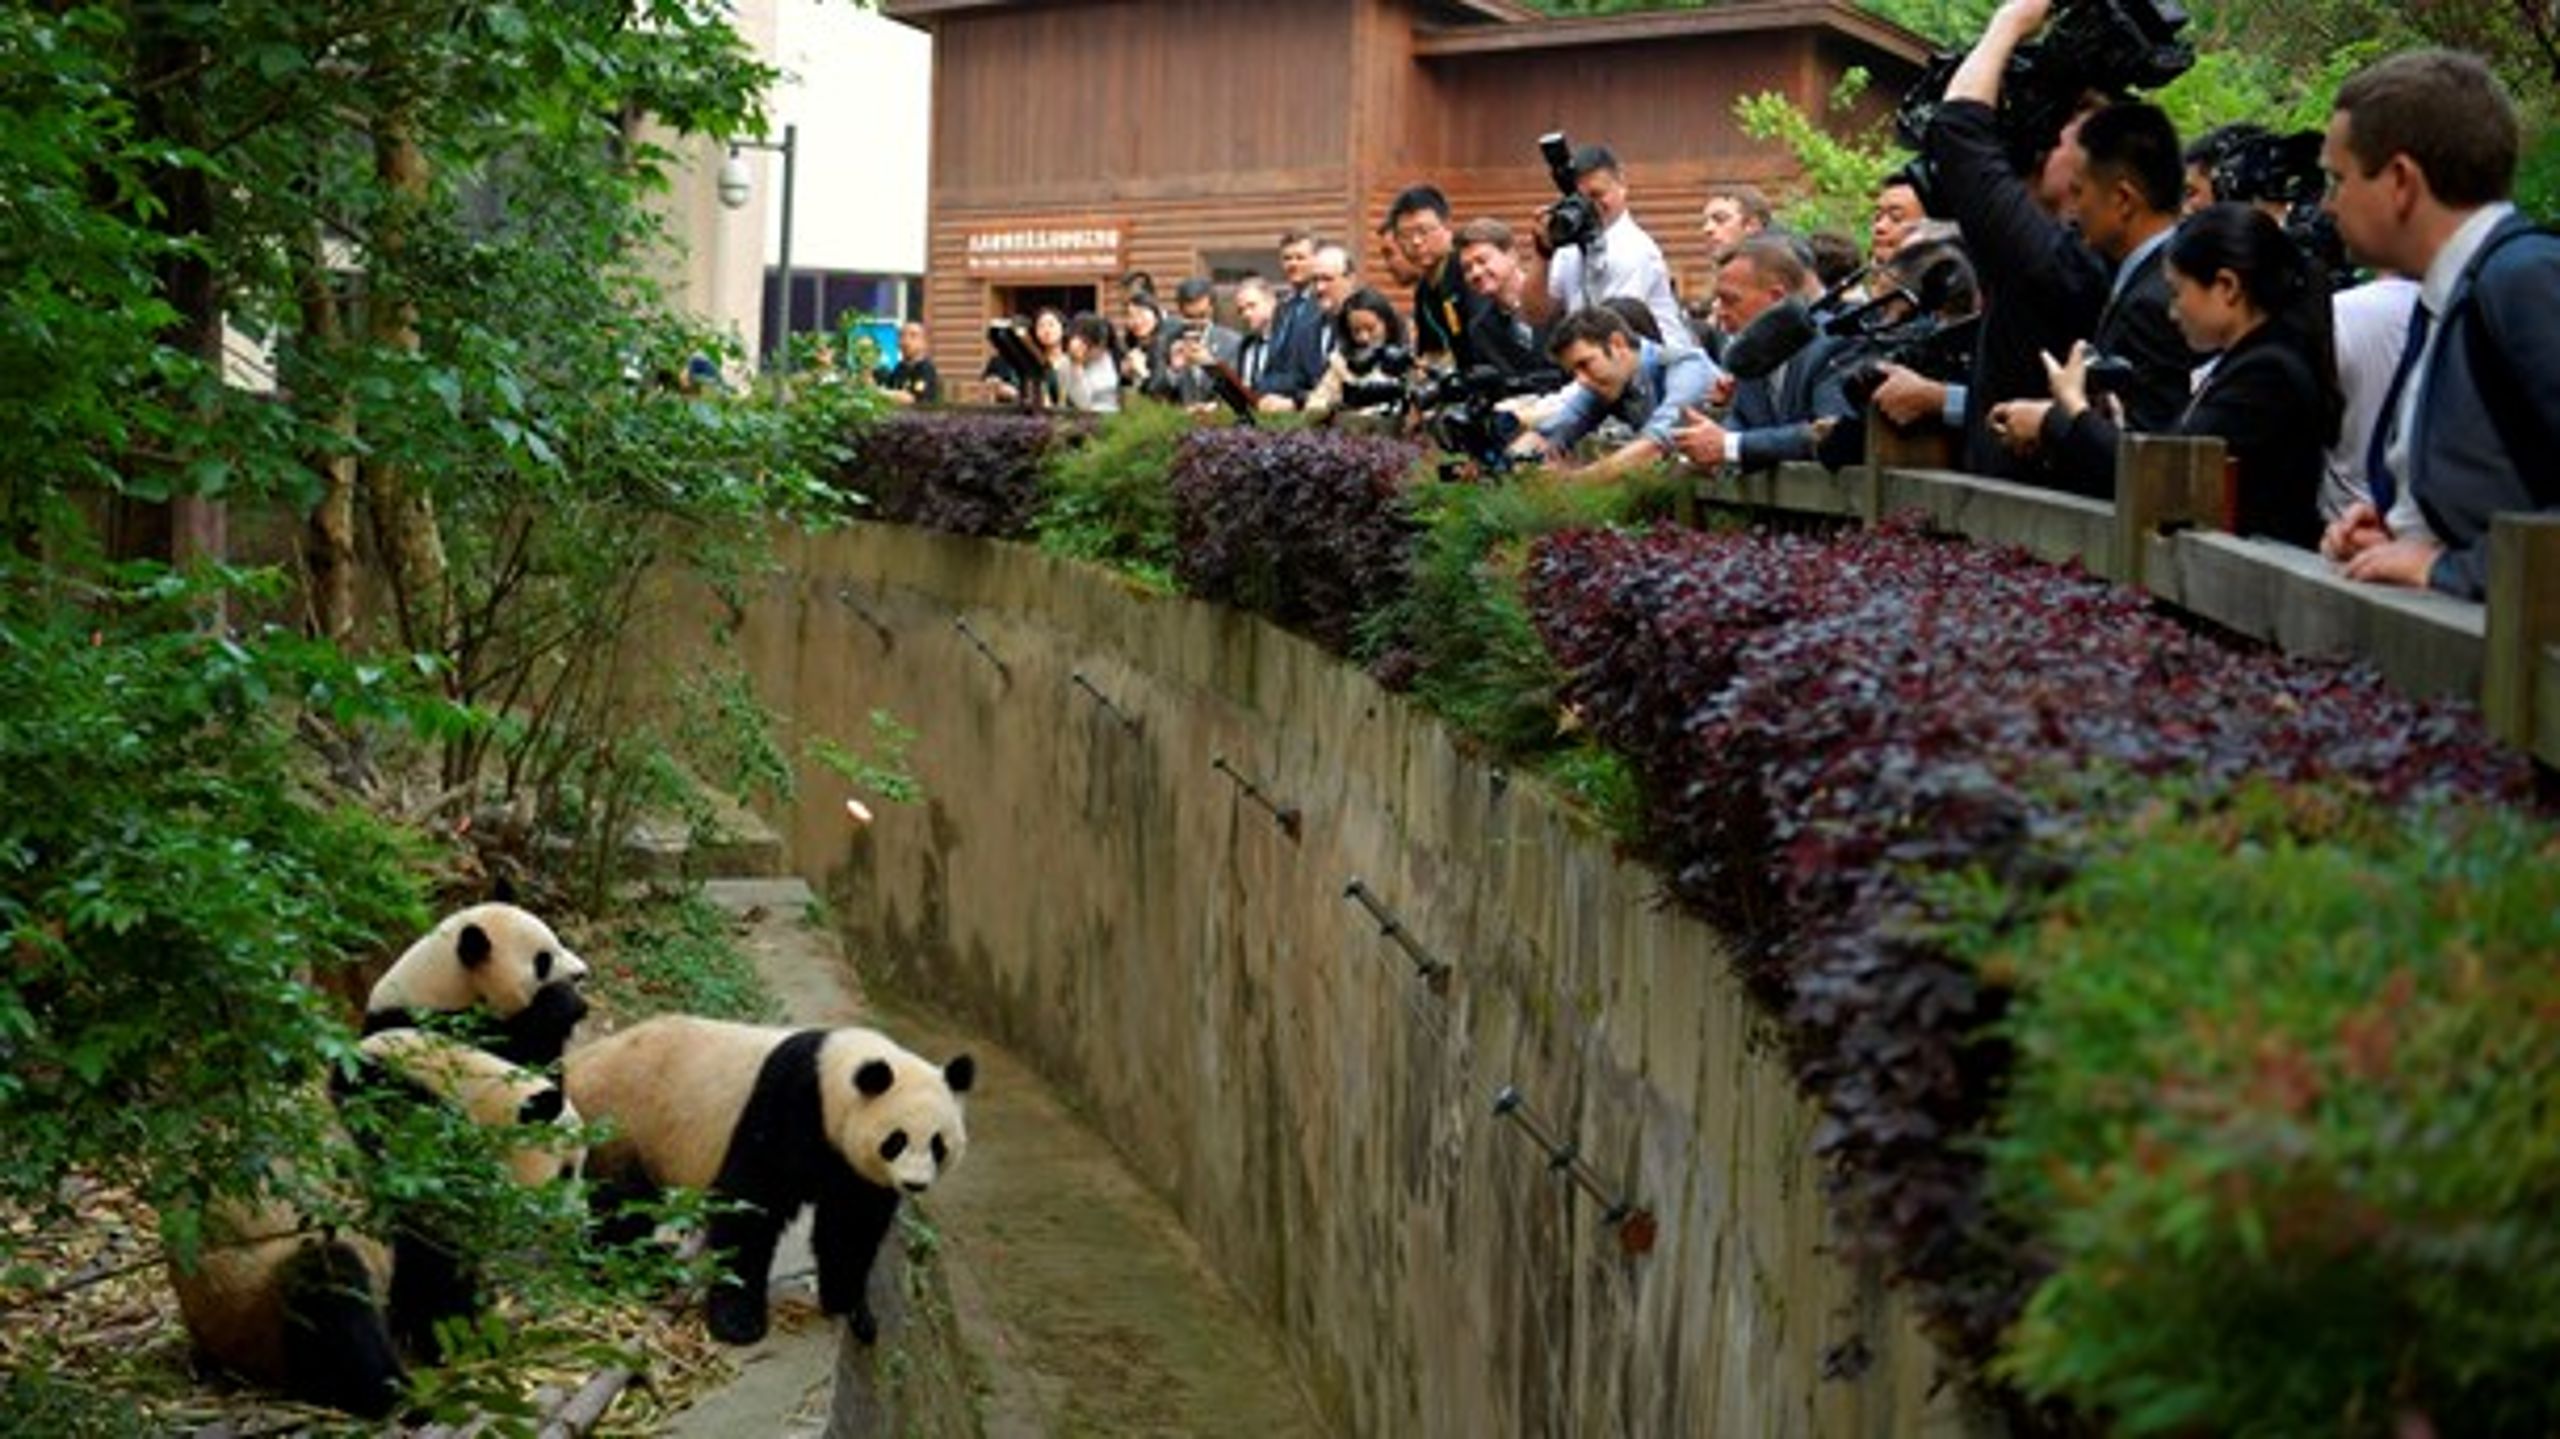 Zoologisk Haves to nye pandaer er en tak for Danmarks opbakning til Kina og manglende kritik. Her besøger Lars Løkke Rasmussen de kinesiske pandaer i 2017.